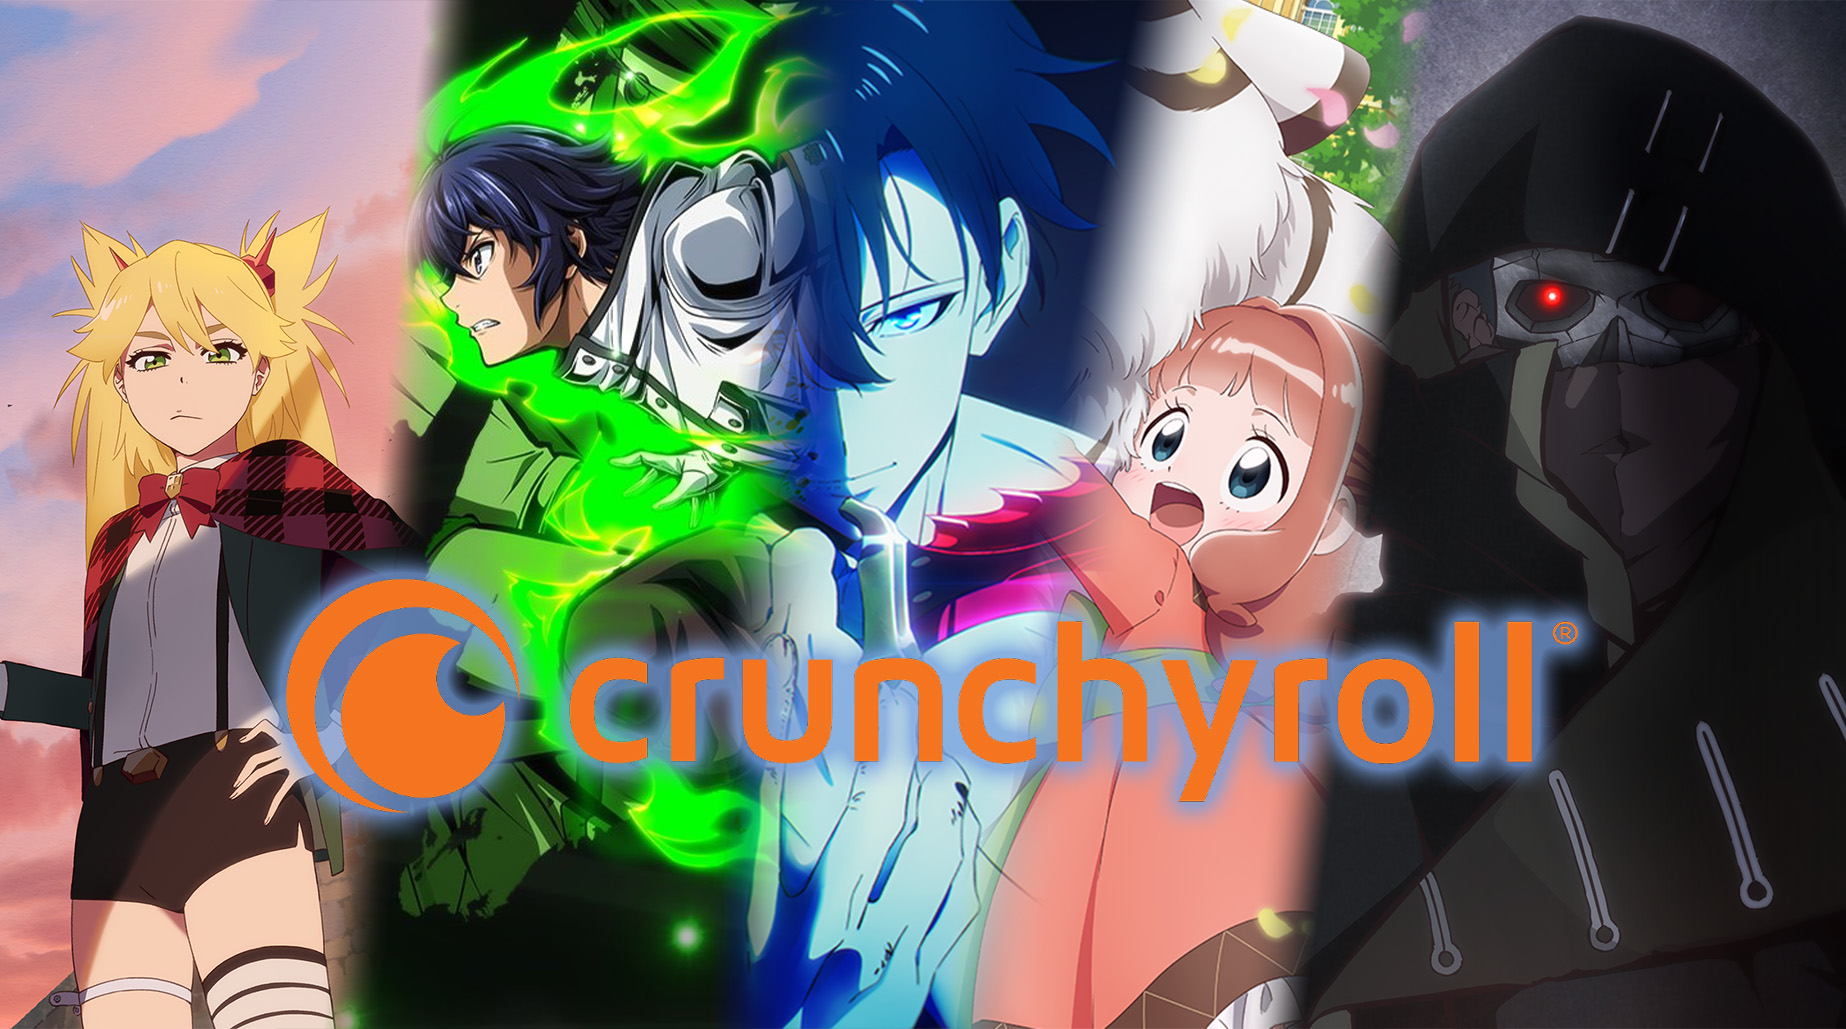 RECS: VTuber Ceres Fauna Lists Her Top 10 Anime - Crunchyroll News